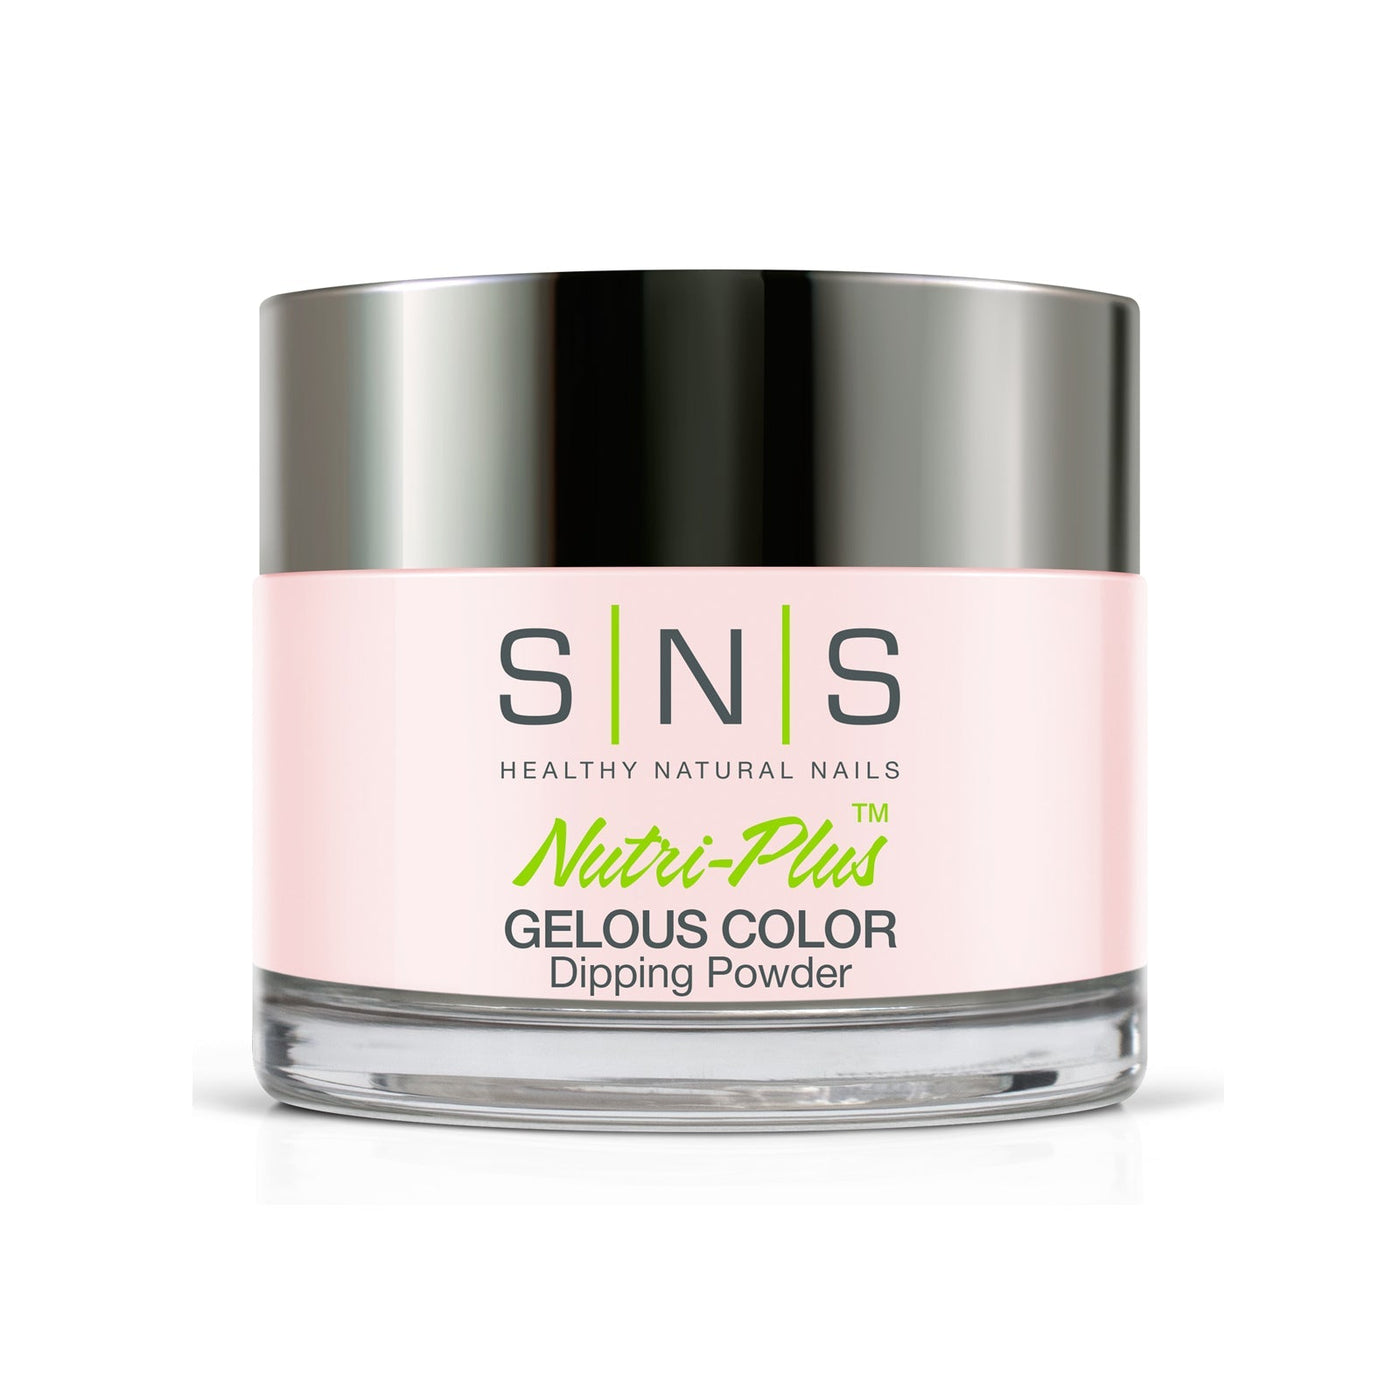 SNS Gelous Color Dipping Powder LV30 Les Mis (43g) packaging